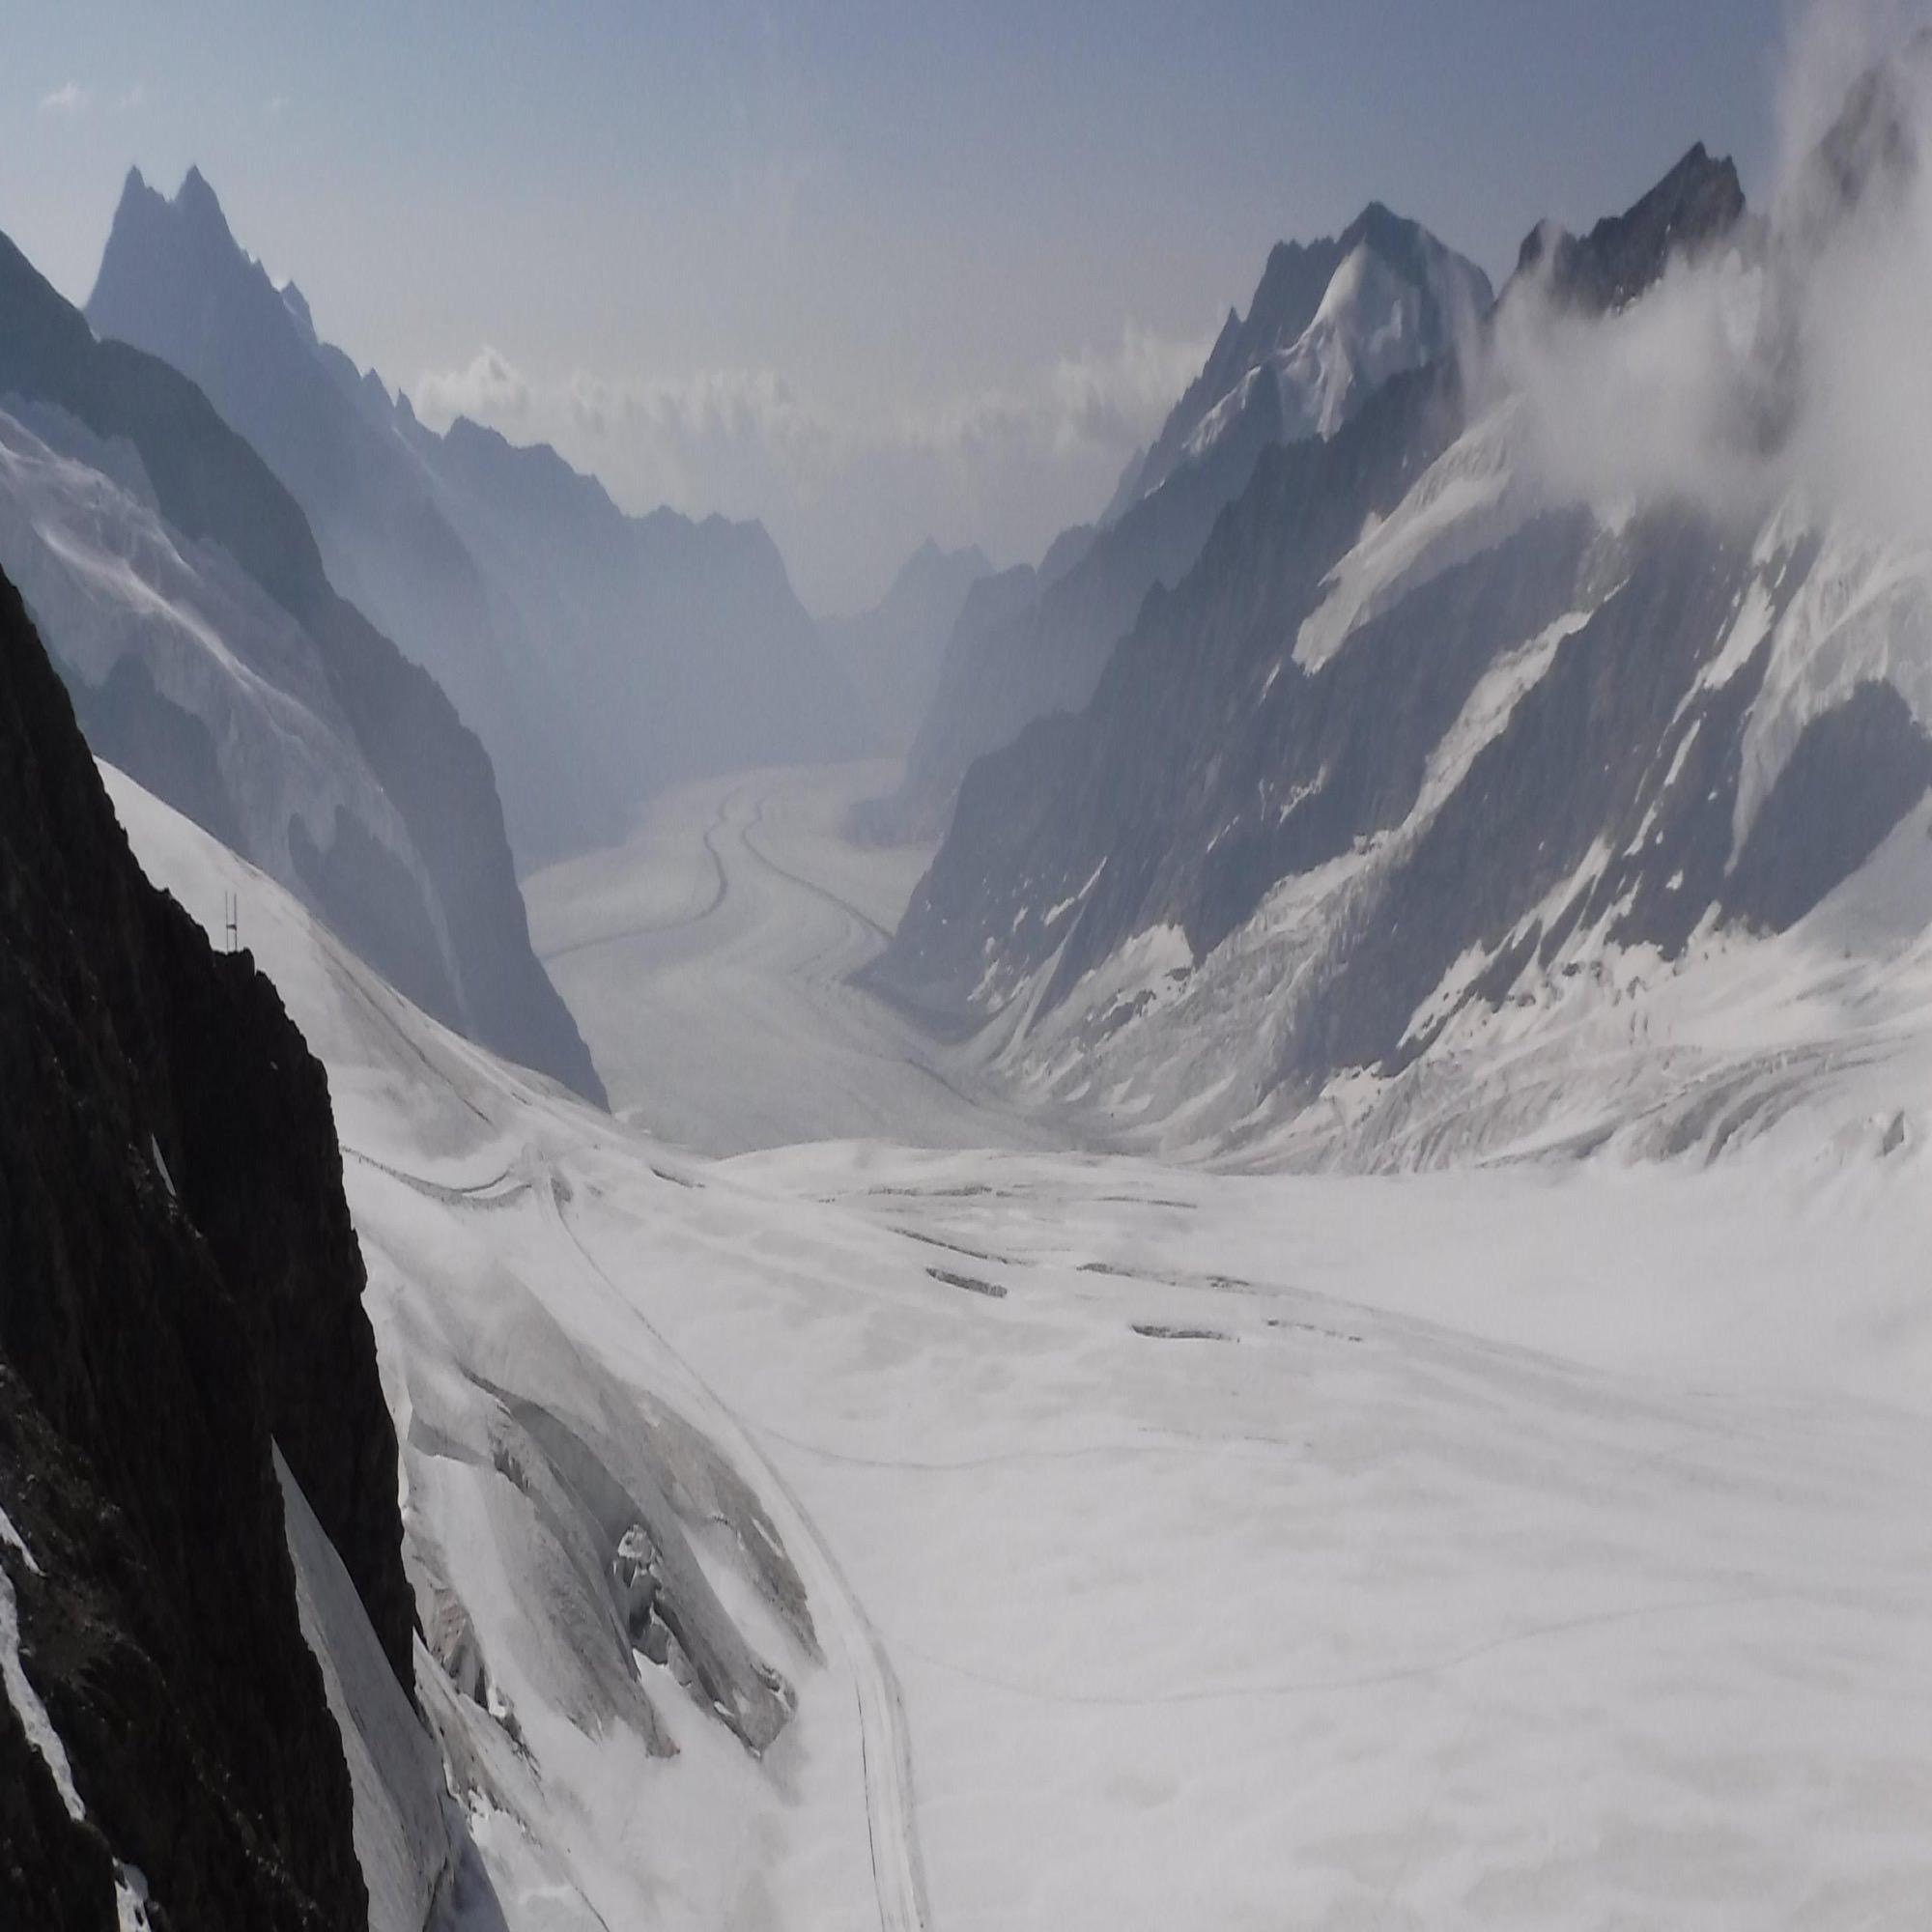 01 The Aletsch Glacier Runs South From Jungraujoch For 20Km